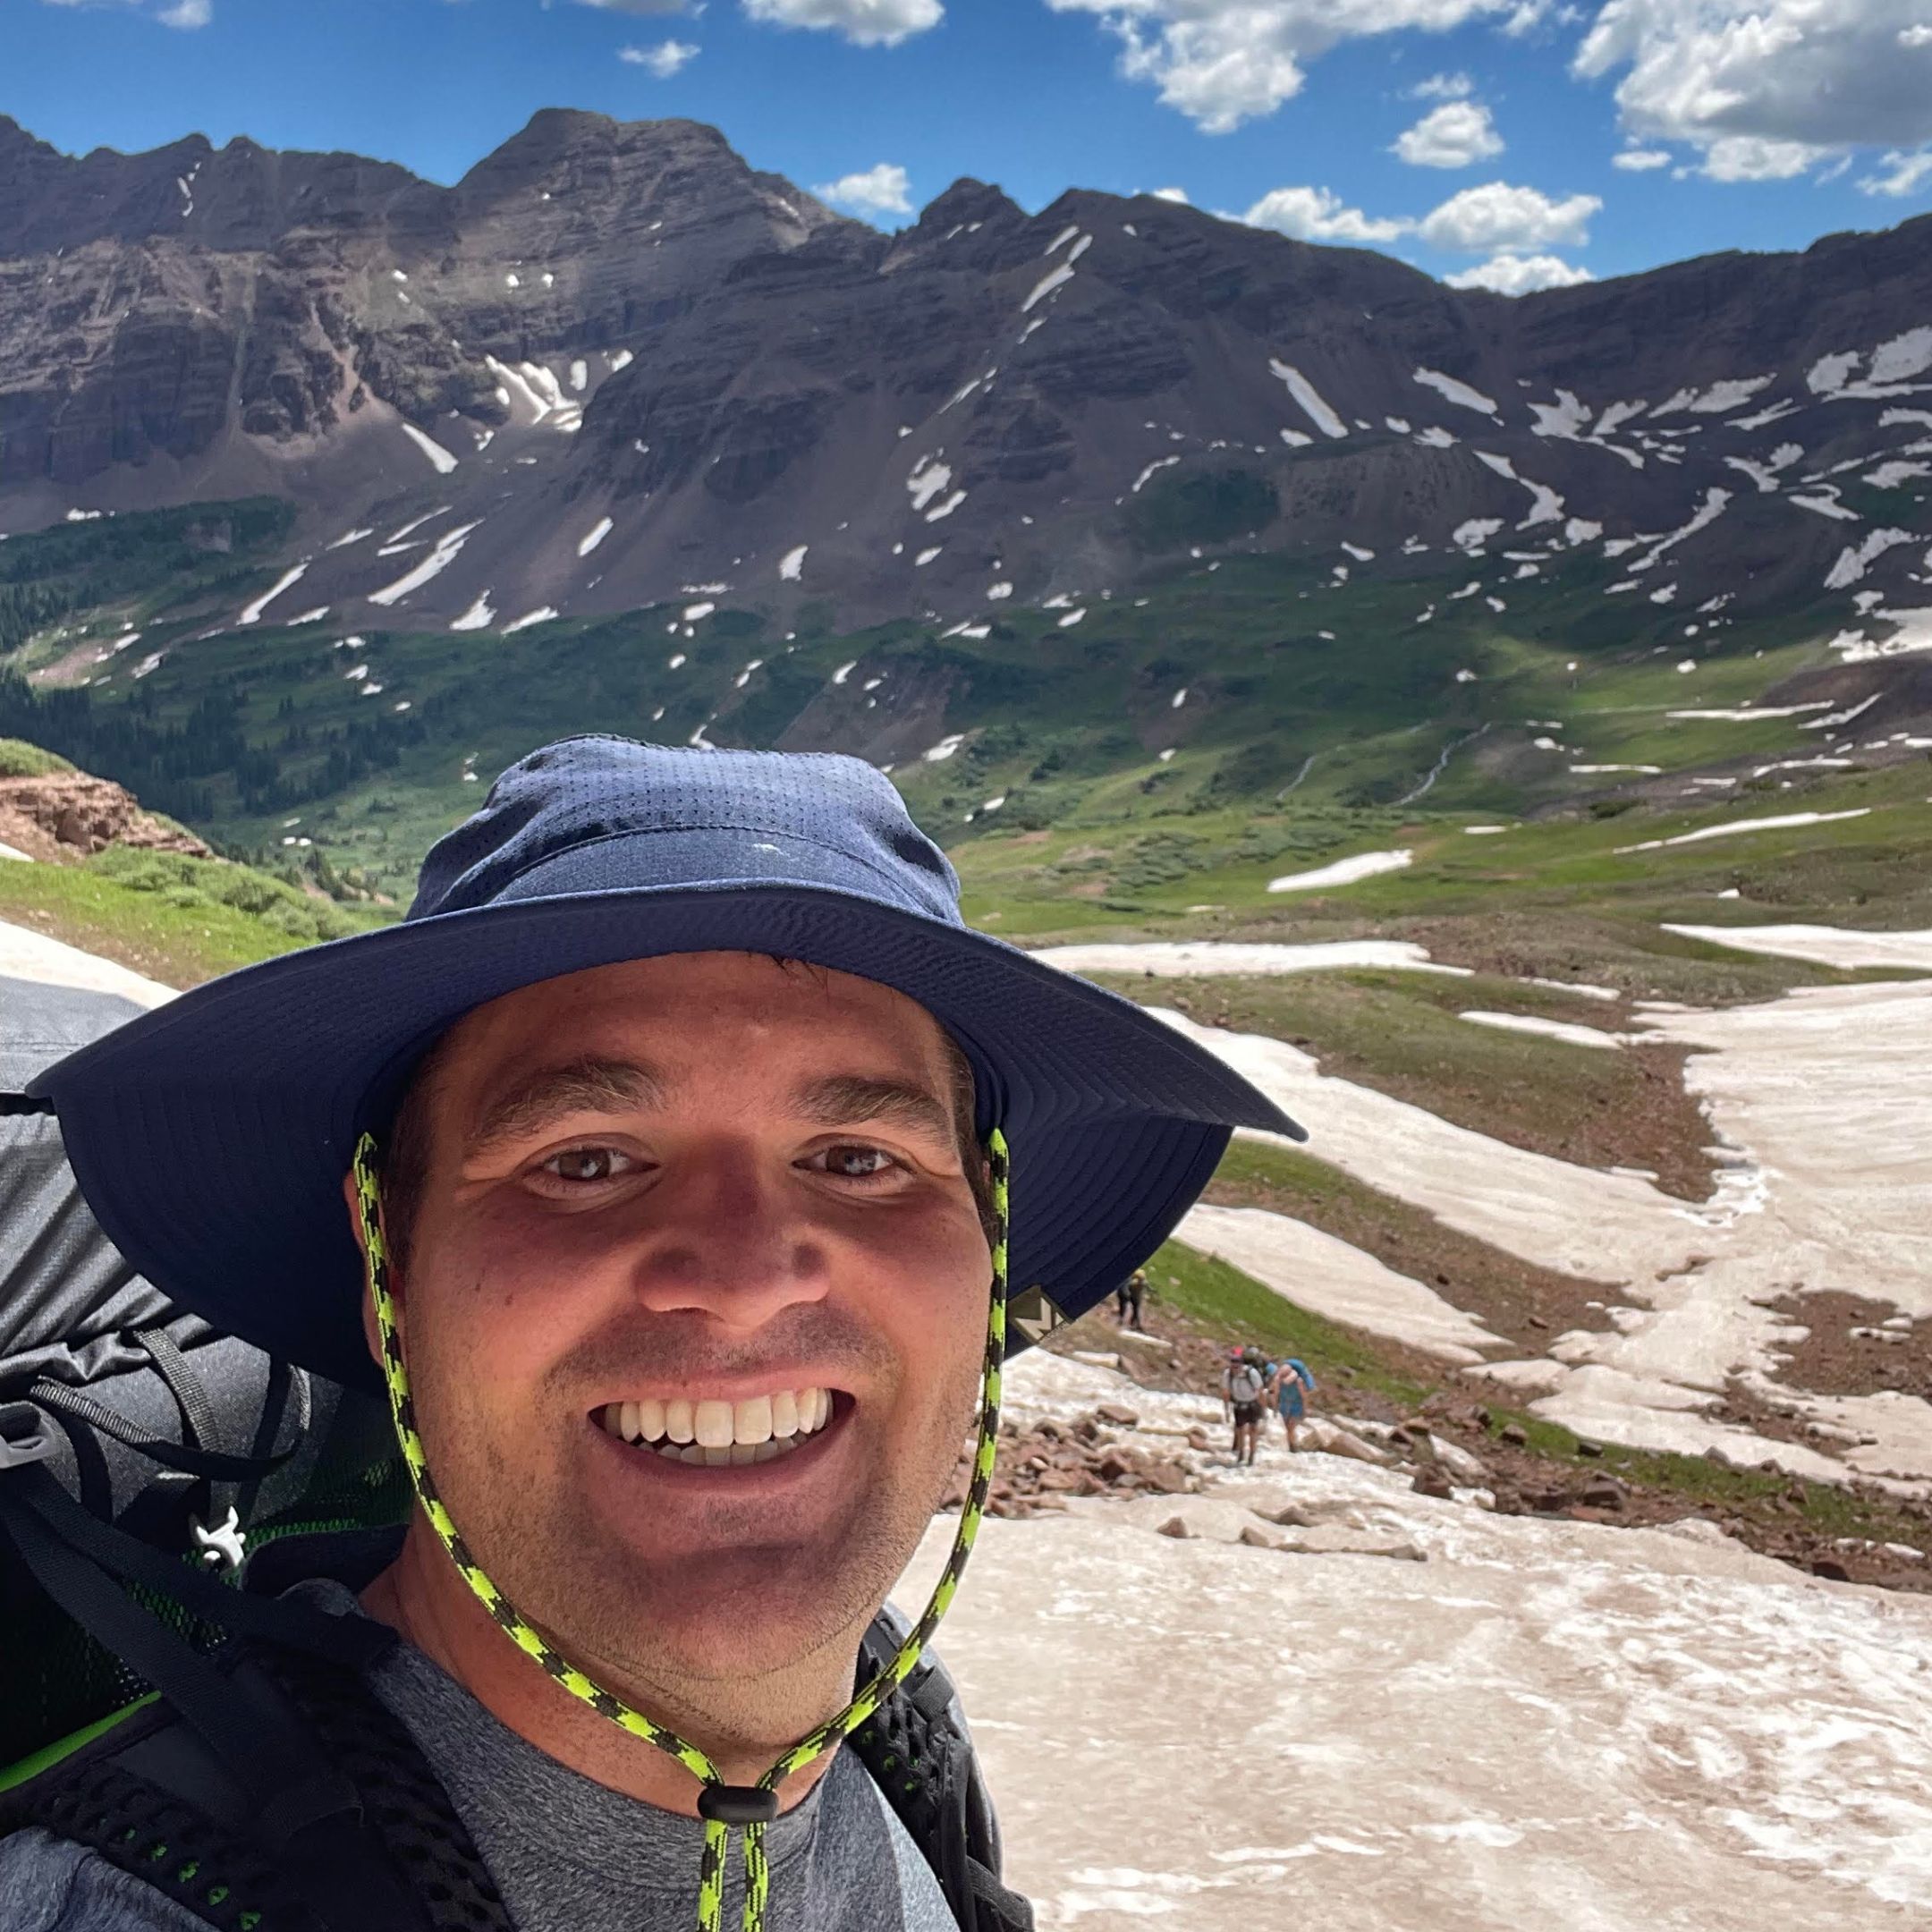 Charlie Hiking in Aspen Colorado